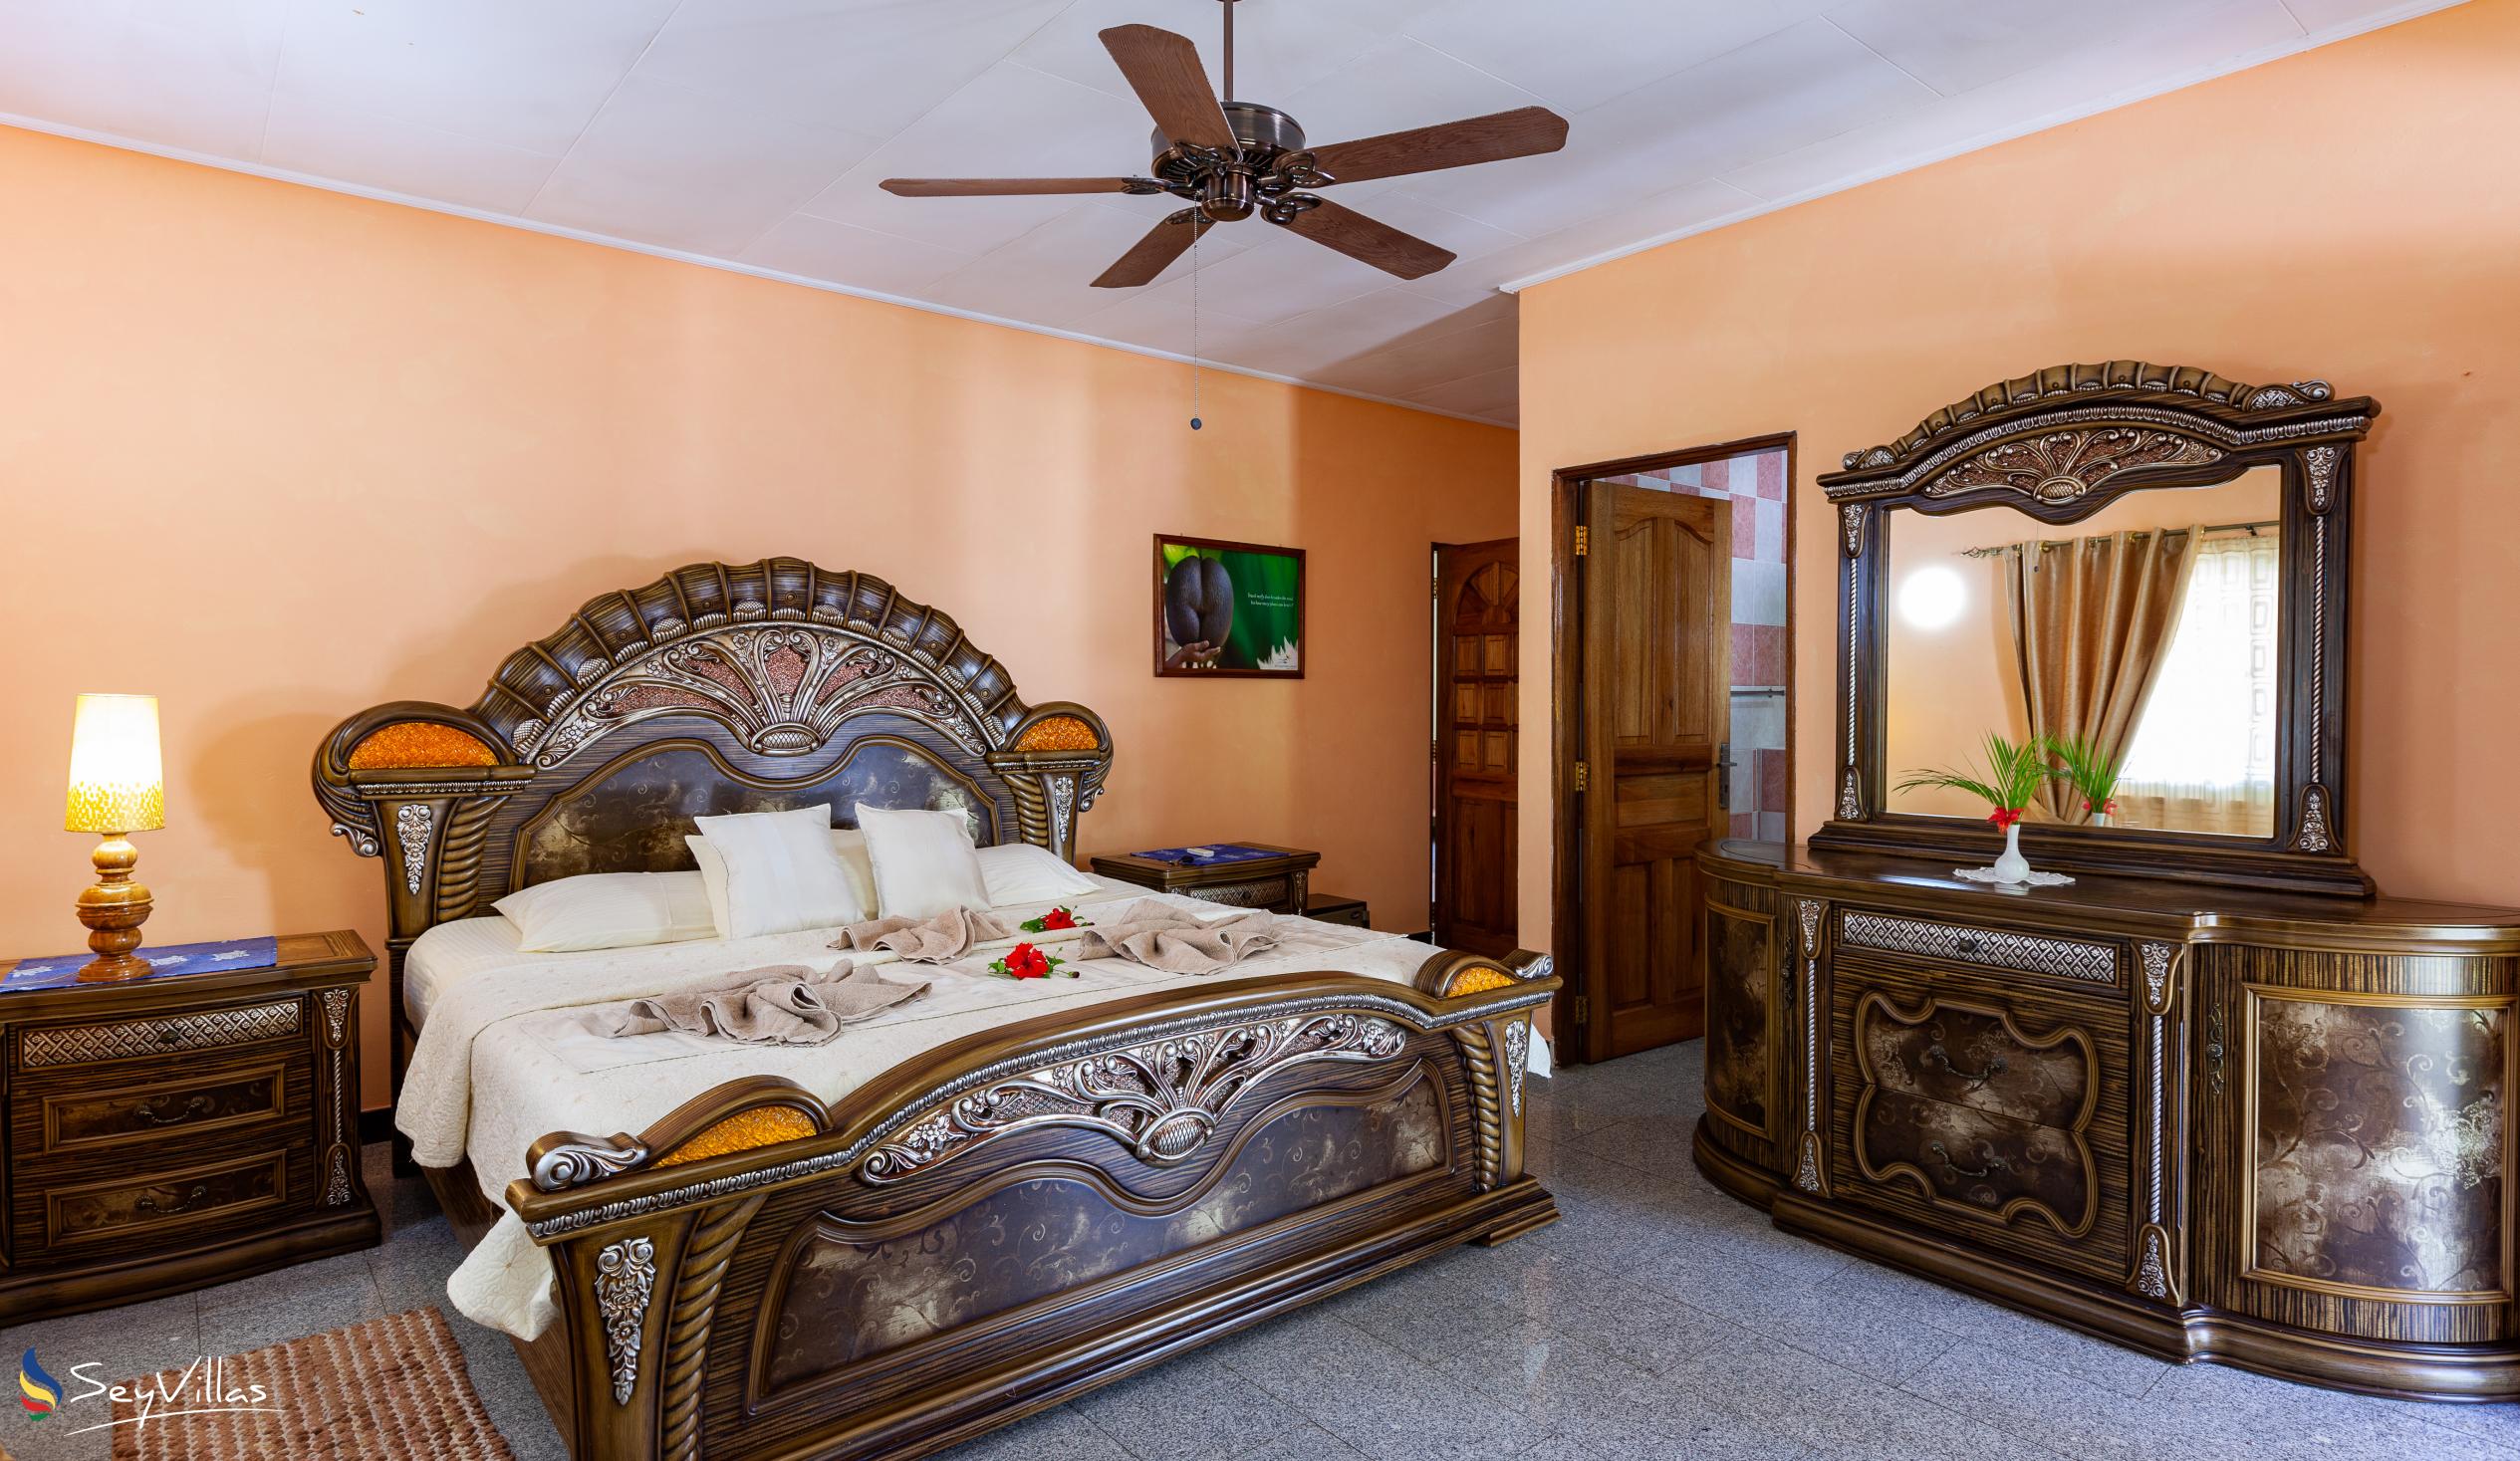 Photo 115: Villa Bananier - Superior Room - Praslin (Seychelles)